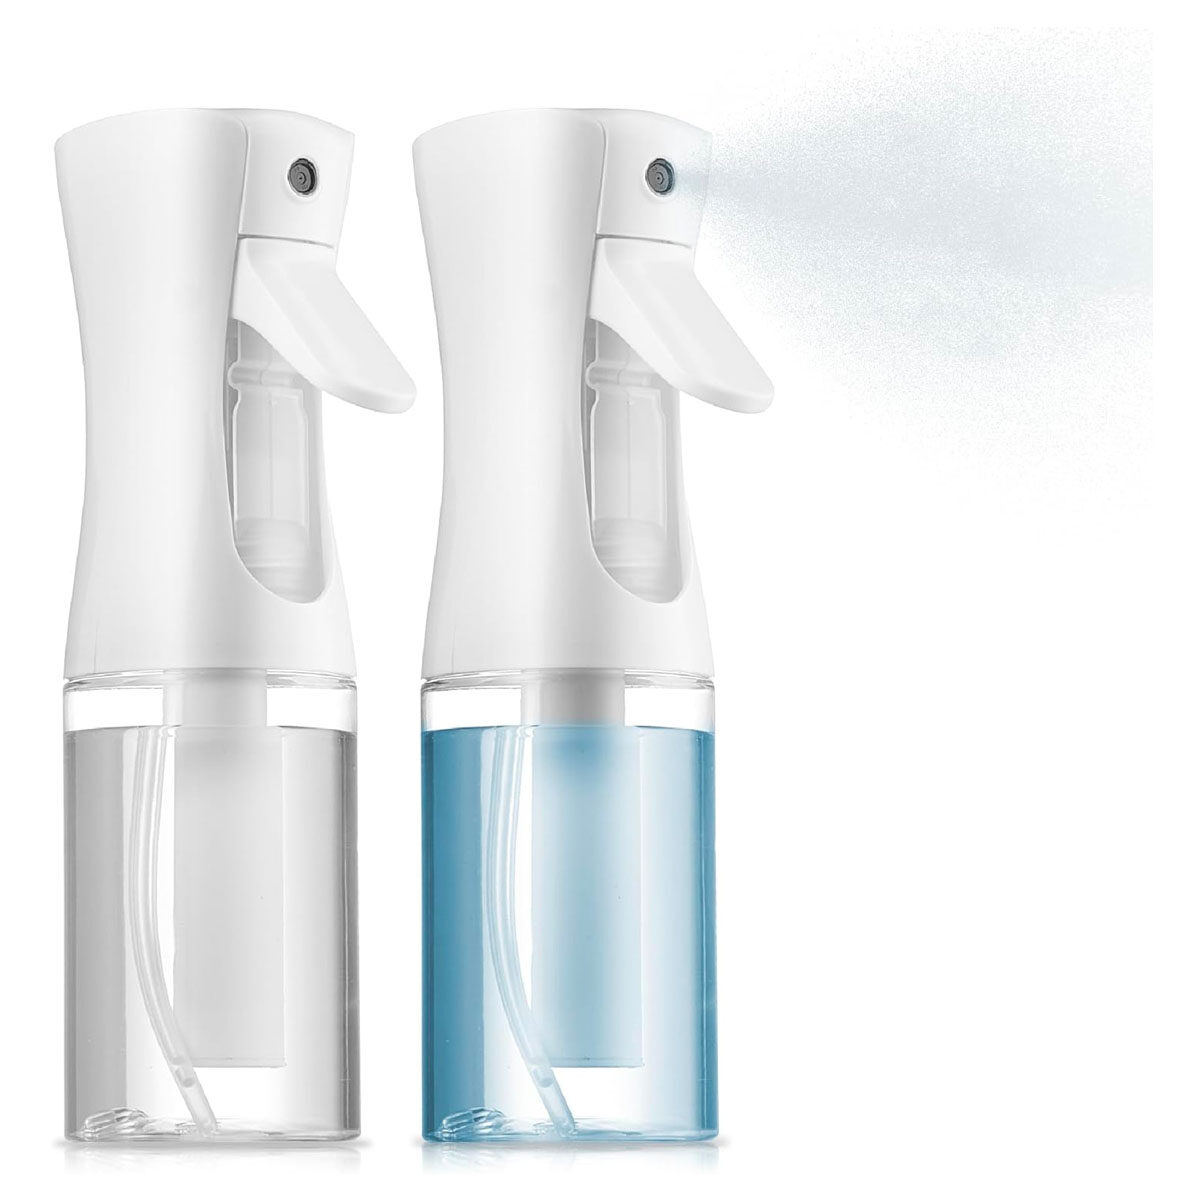 Comprehensive Guide to Bulk 2 oz Plastic Spray Bottles